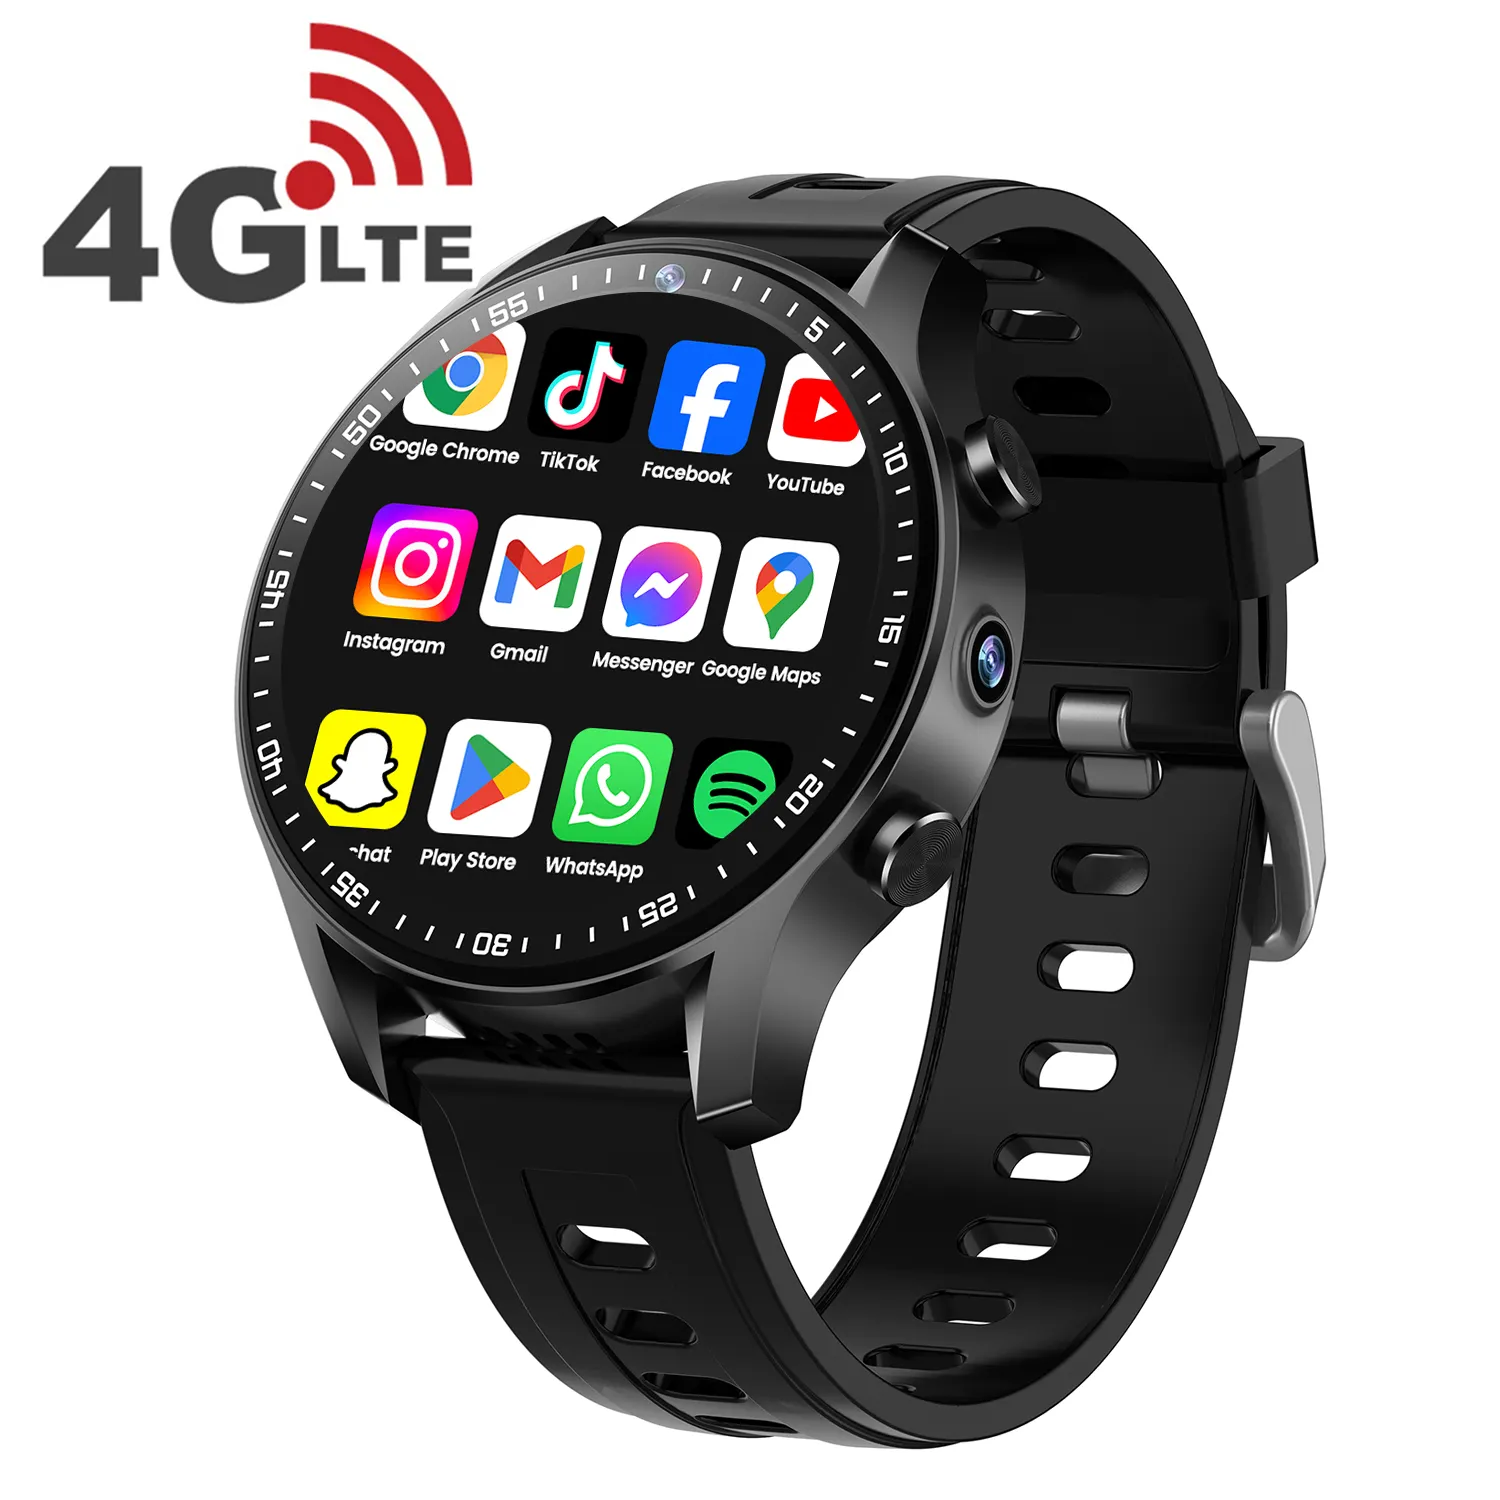 VALDUS ساعة يد ذكية يدعم 4G Android مزودة بكاميرا عالية الوضوح وتقنية التعرف على الوجه وتقنية التنبؤ بالصوت وتقنية التتبع GPS وخاصية AMOLED وبطارية 700 مللي أمبير ساعة يد ذكية X700S مدفوعة للتنزيل والتطبيقات